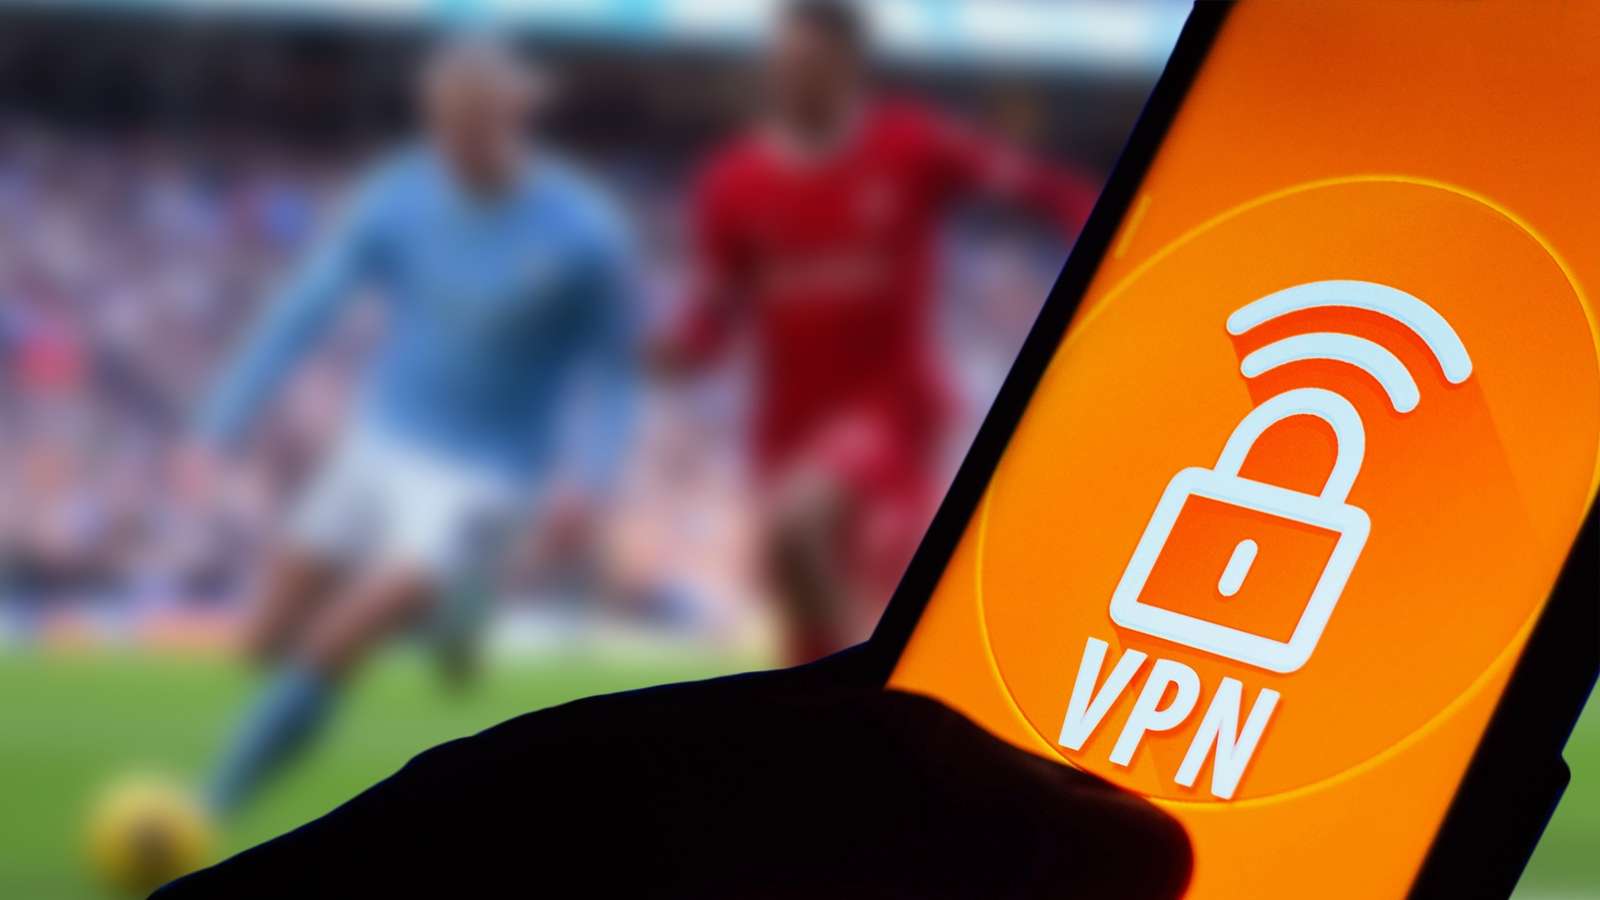  VPN for sports